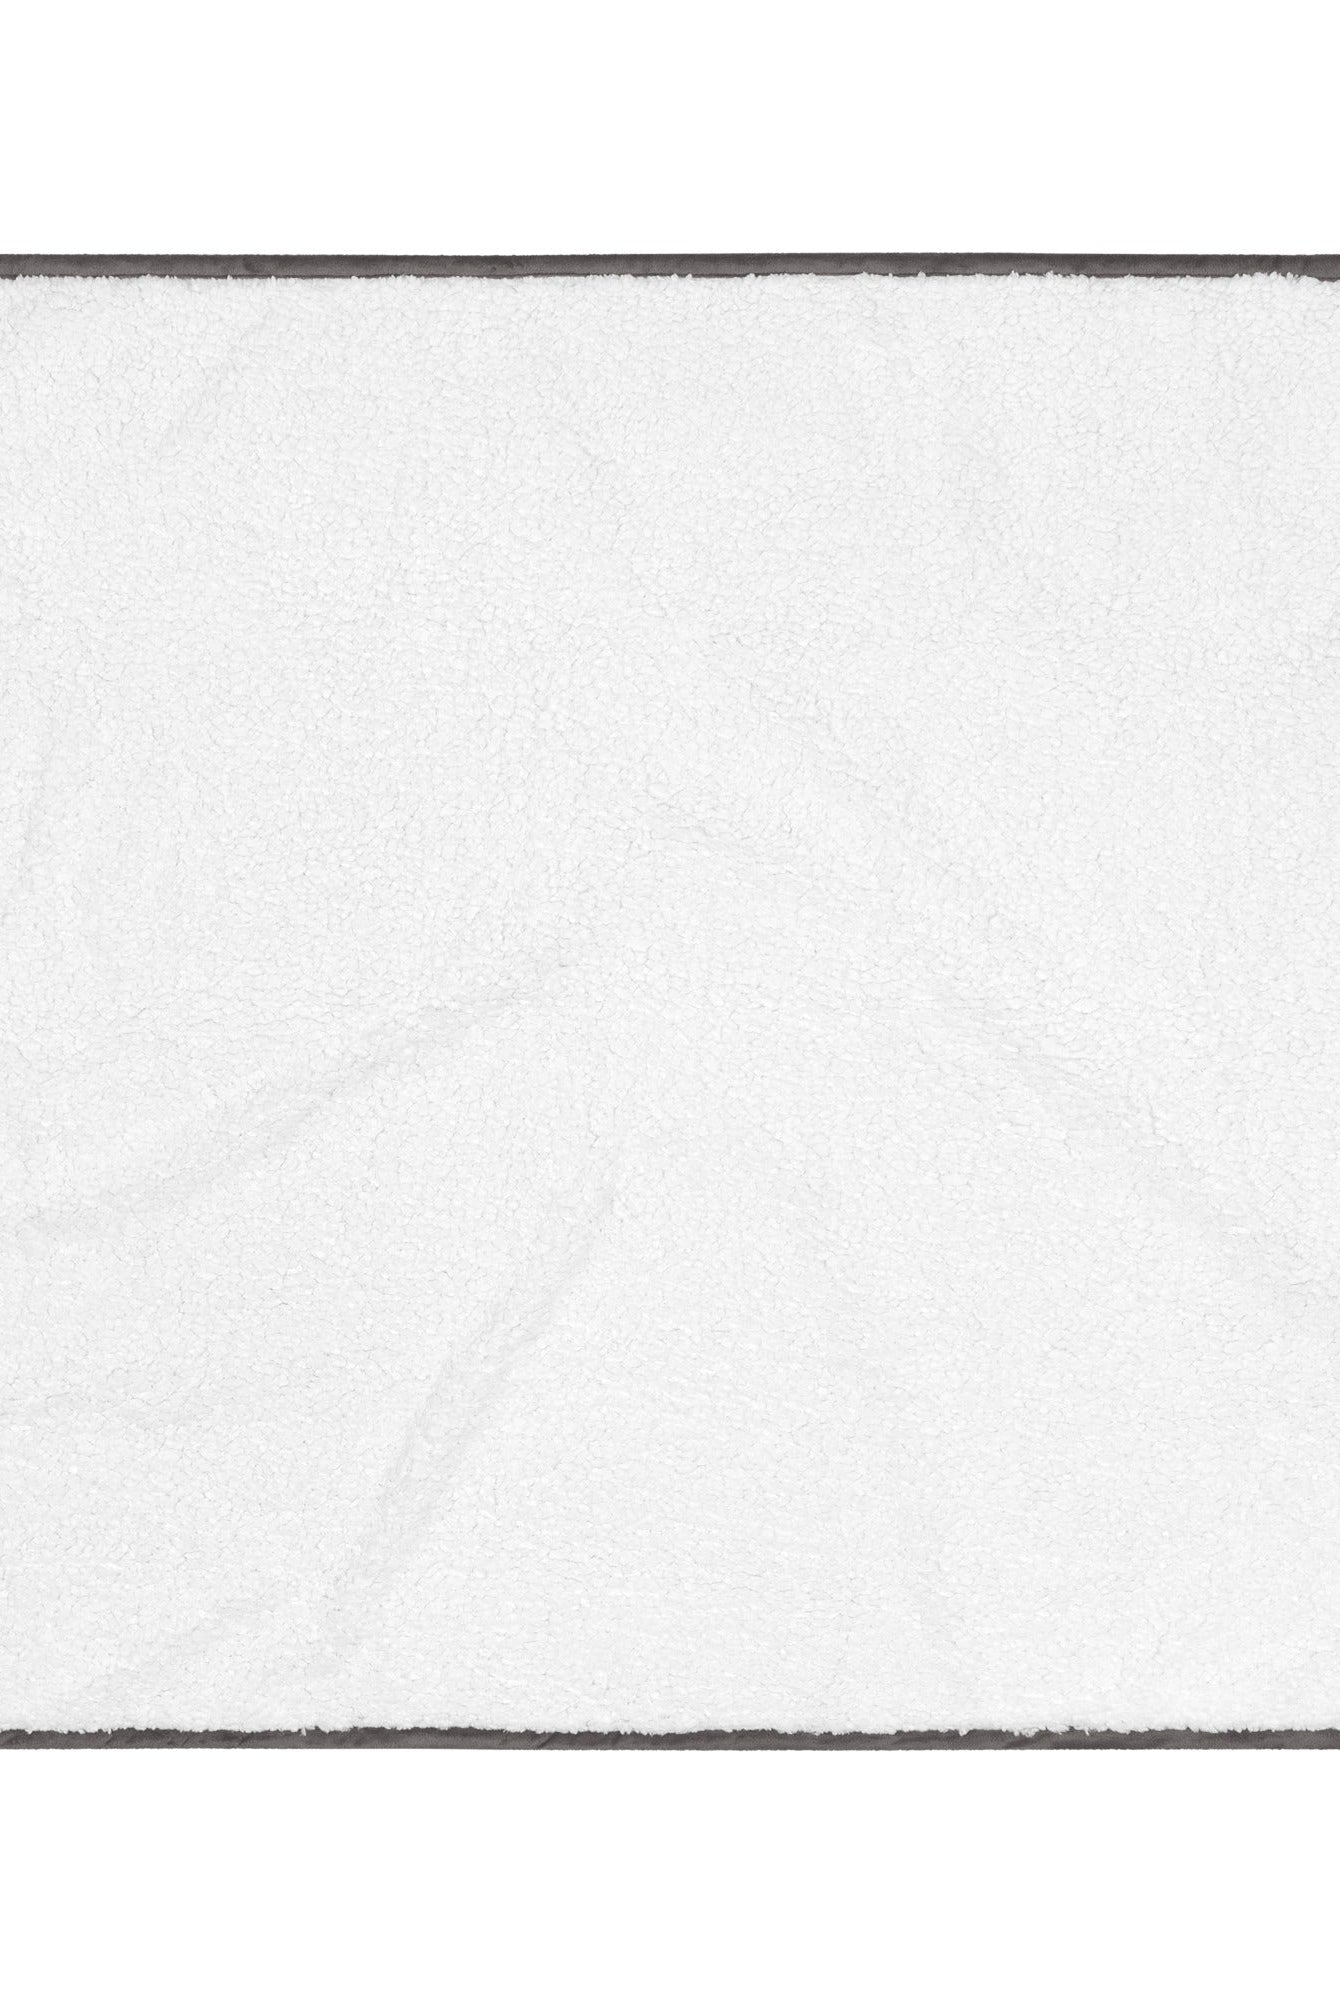 Dragon Foxx™ Premium sherpa blanket - Premium sherpa blanket - DRAGON FOXX™ - Dragon Foxx™ Premium sherpa blanket - 9801917_13446 - Heather Grey - 50″×60″ - Sherpa - Fleece Blanket - 50″×60″ blanket - 50″×60″ Sherpa Blanket - Black Premium sherpa blanket